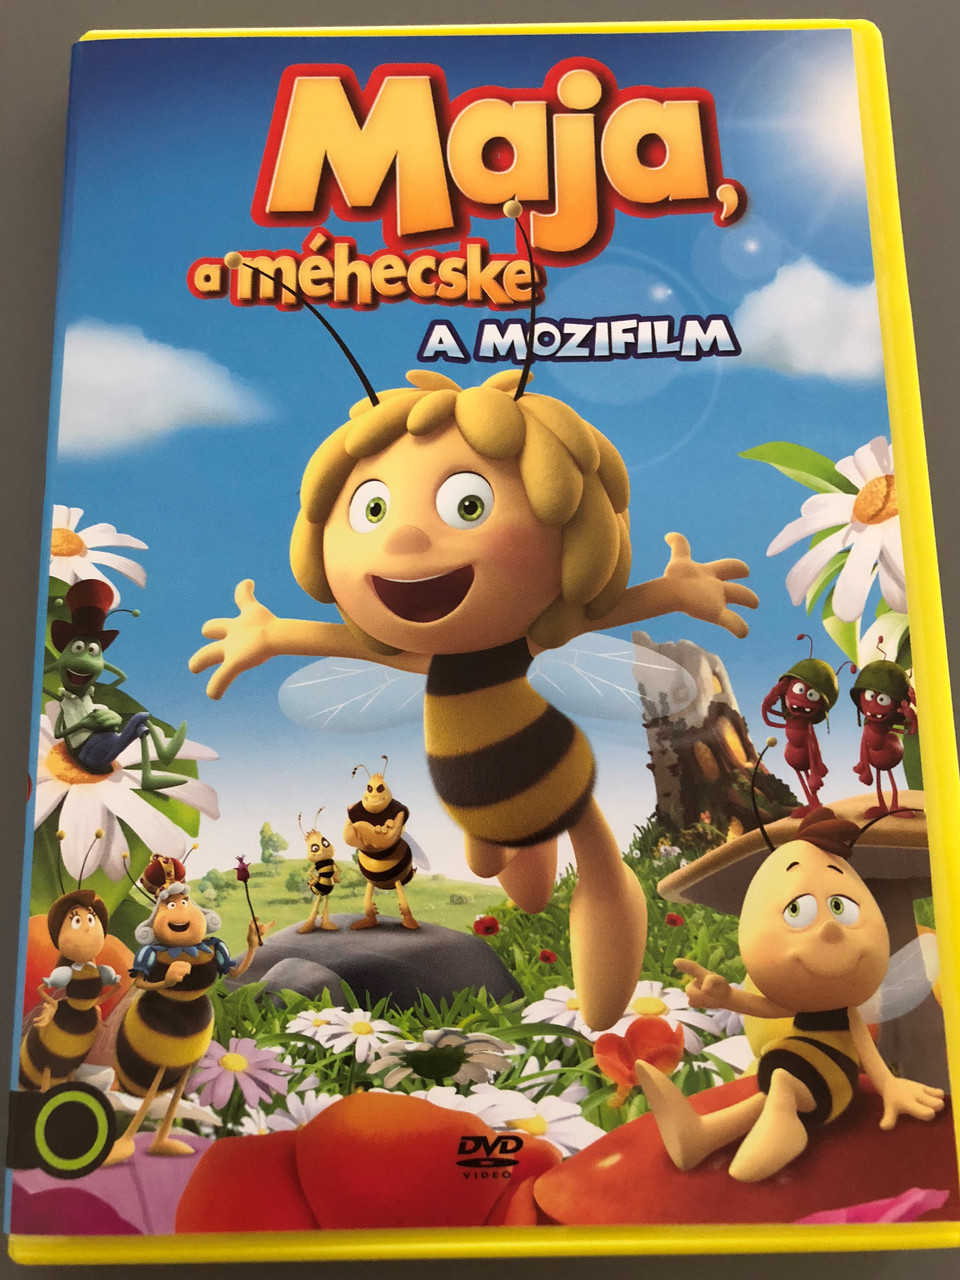 Maya The Bee - The Movie DVD 2014 Maja, a méhecske, A Mozifilm / Directed  by Alexs Stadermann / Starring: Coco Jack Gillies, Noah Taylor, Kodi  Smit-McPhee, Richard Roxburgh - bibleinmylanguage